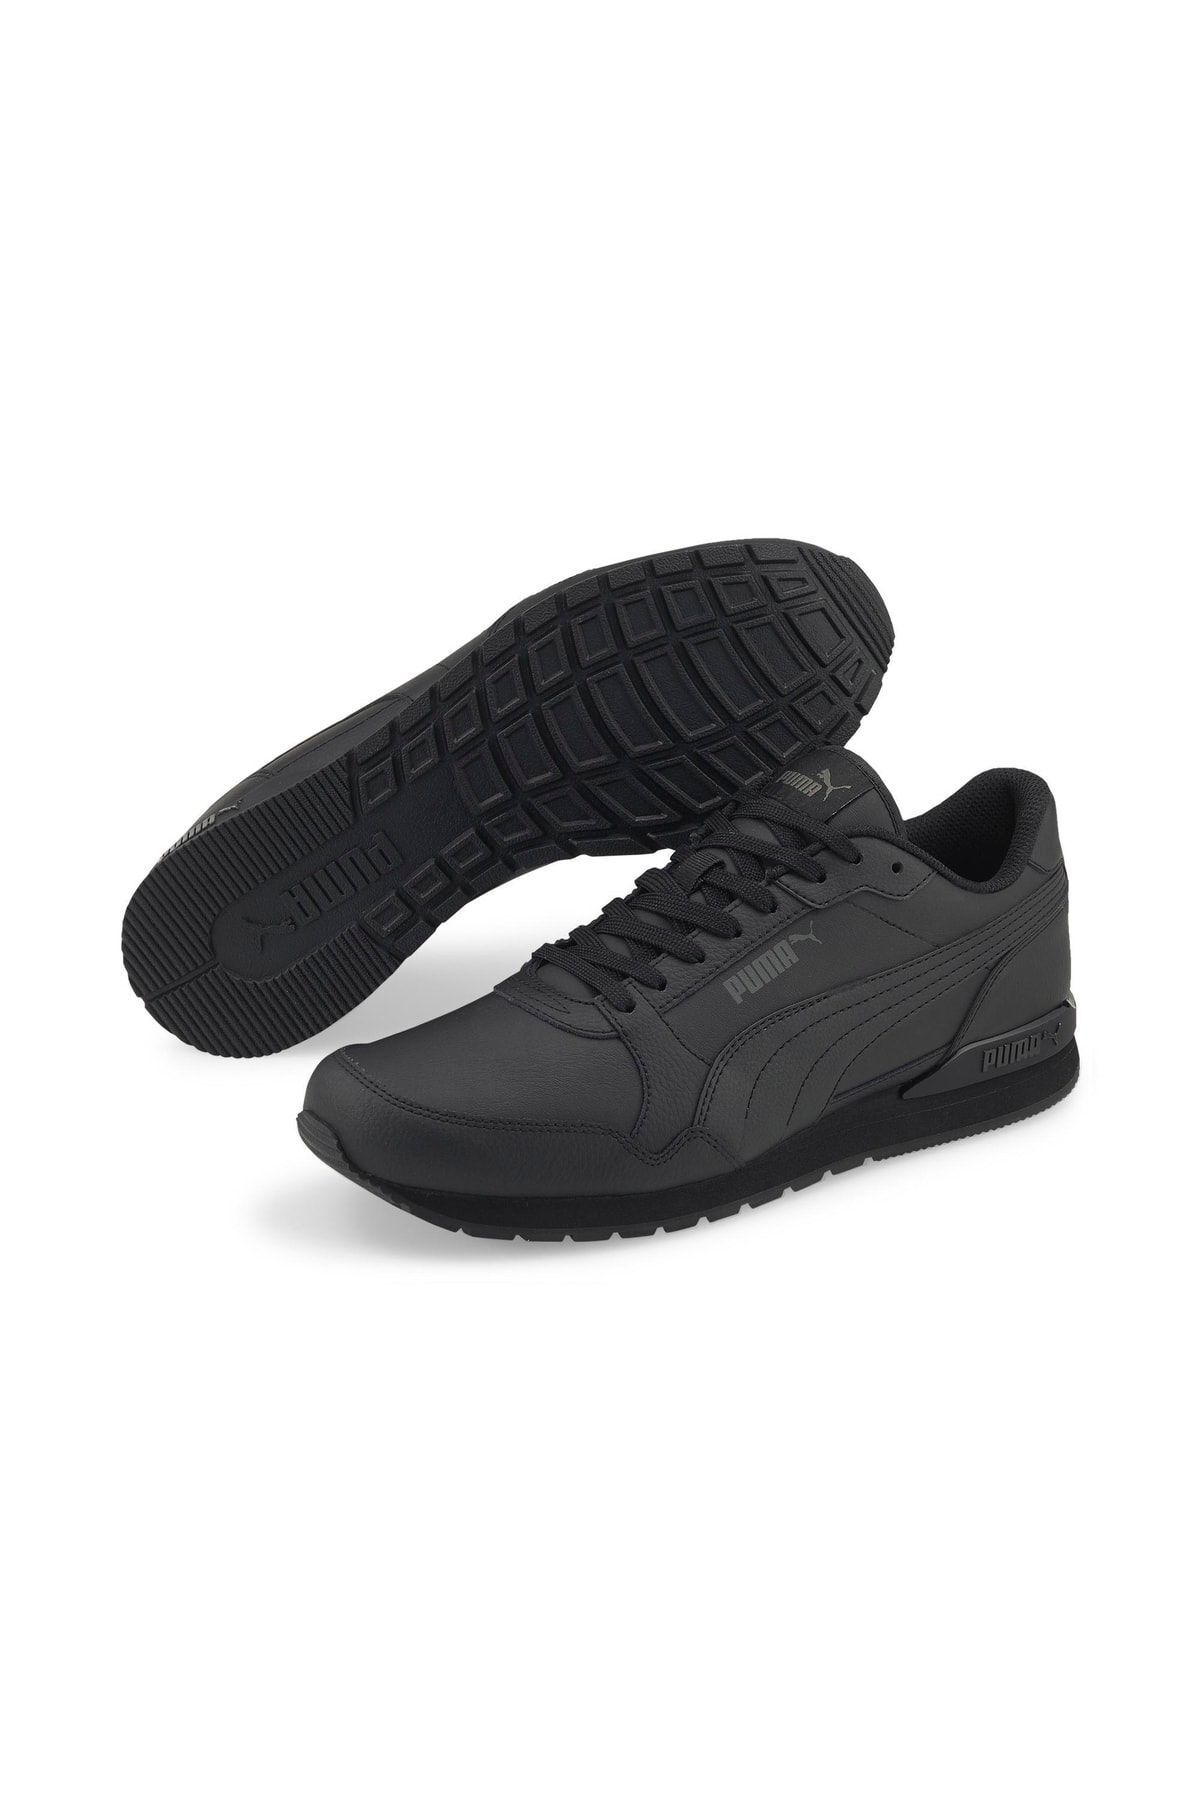 Puma St Runner V3 L Black Unisex Sports Shoes 384855-11 - Trendyol